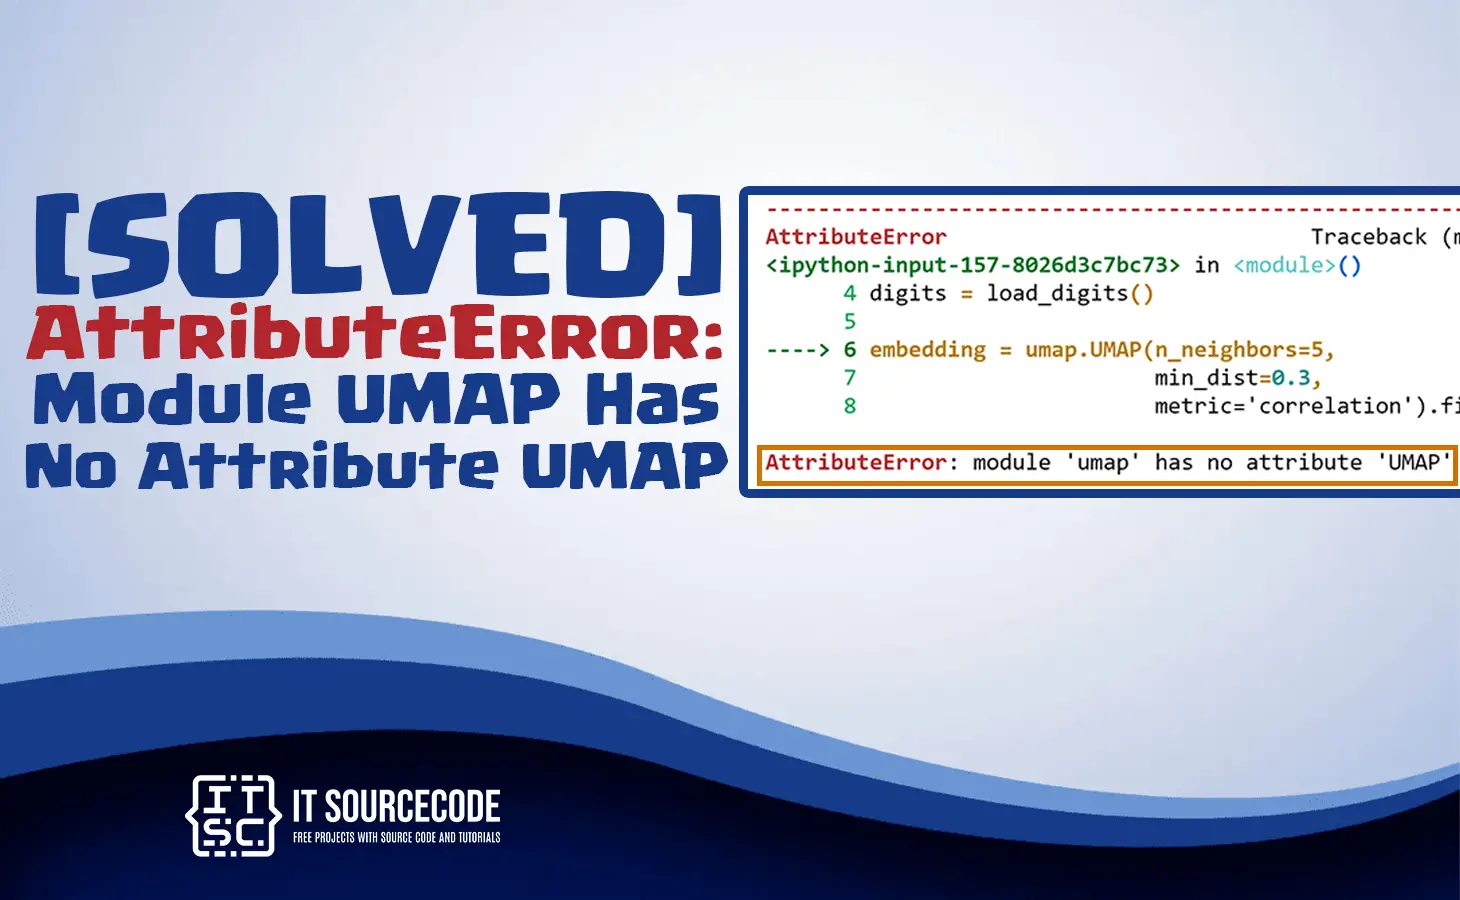 AttributeError Module UMAP Has No Attribute UMAP